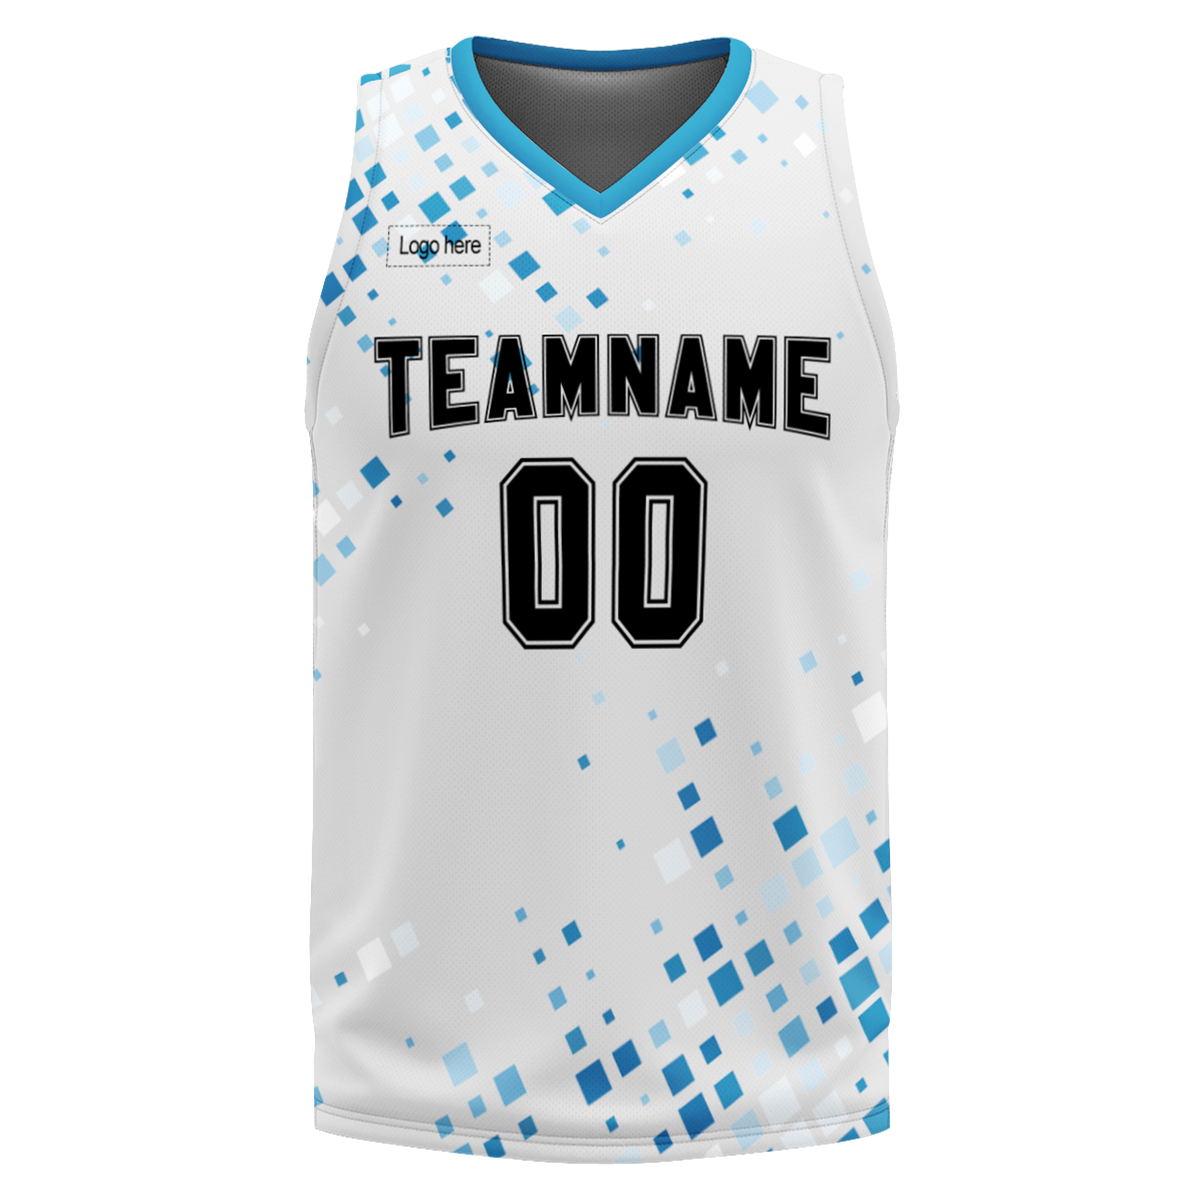 custom-sublimation-basketball-wear-clothes-t-shirt-team-uniforms-set-men-print-on-demand-basketball-jersey-suits-at-cj-pod-4